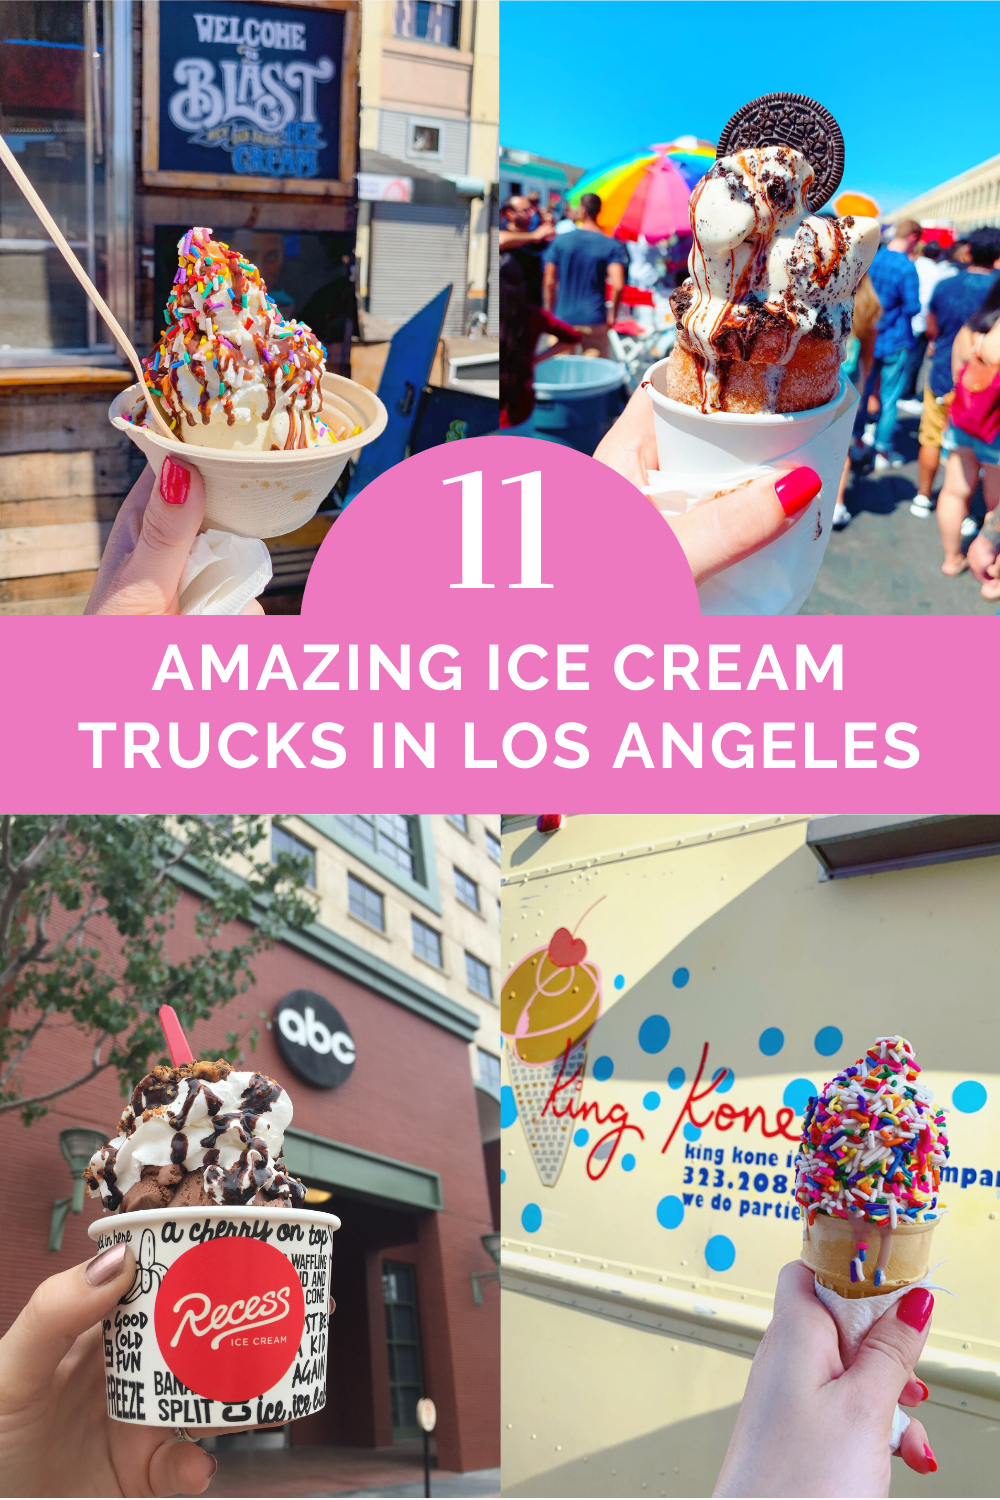 The Tastiest Ice Cream in LA